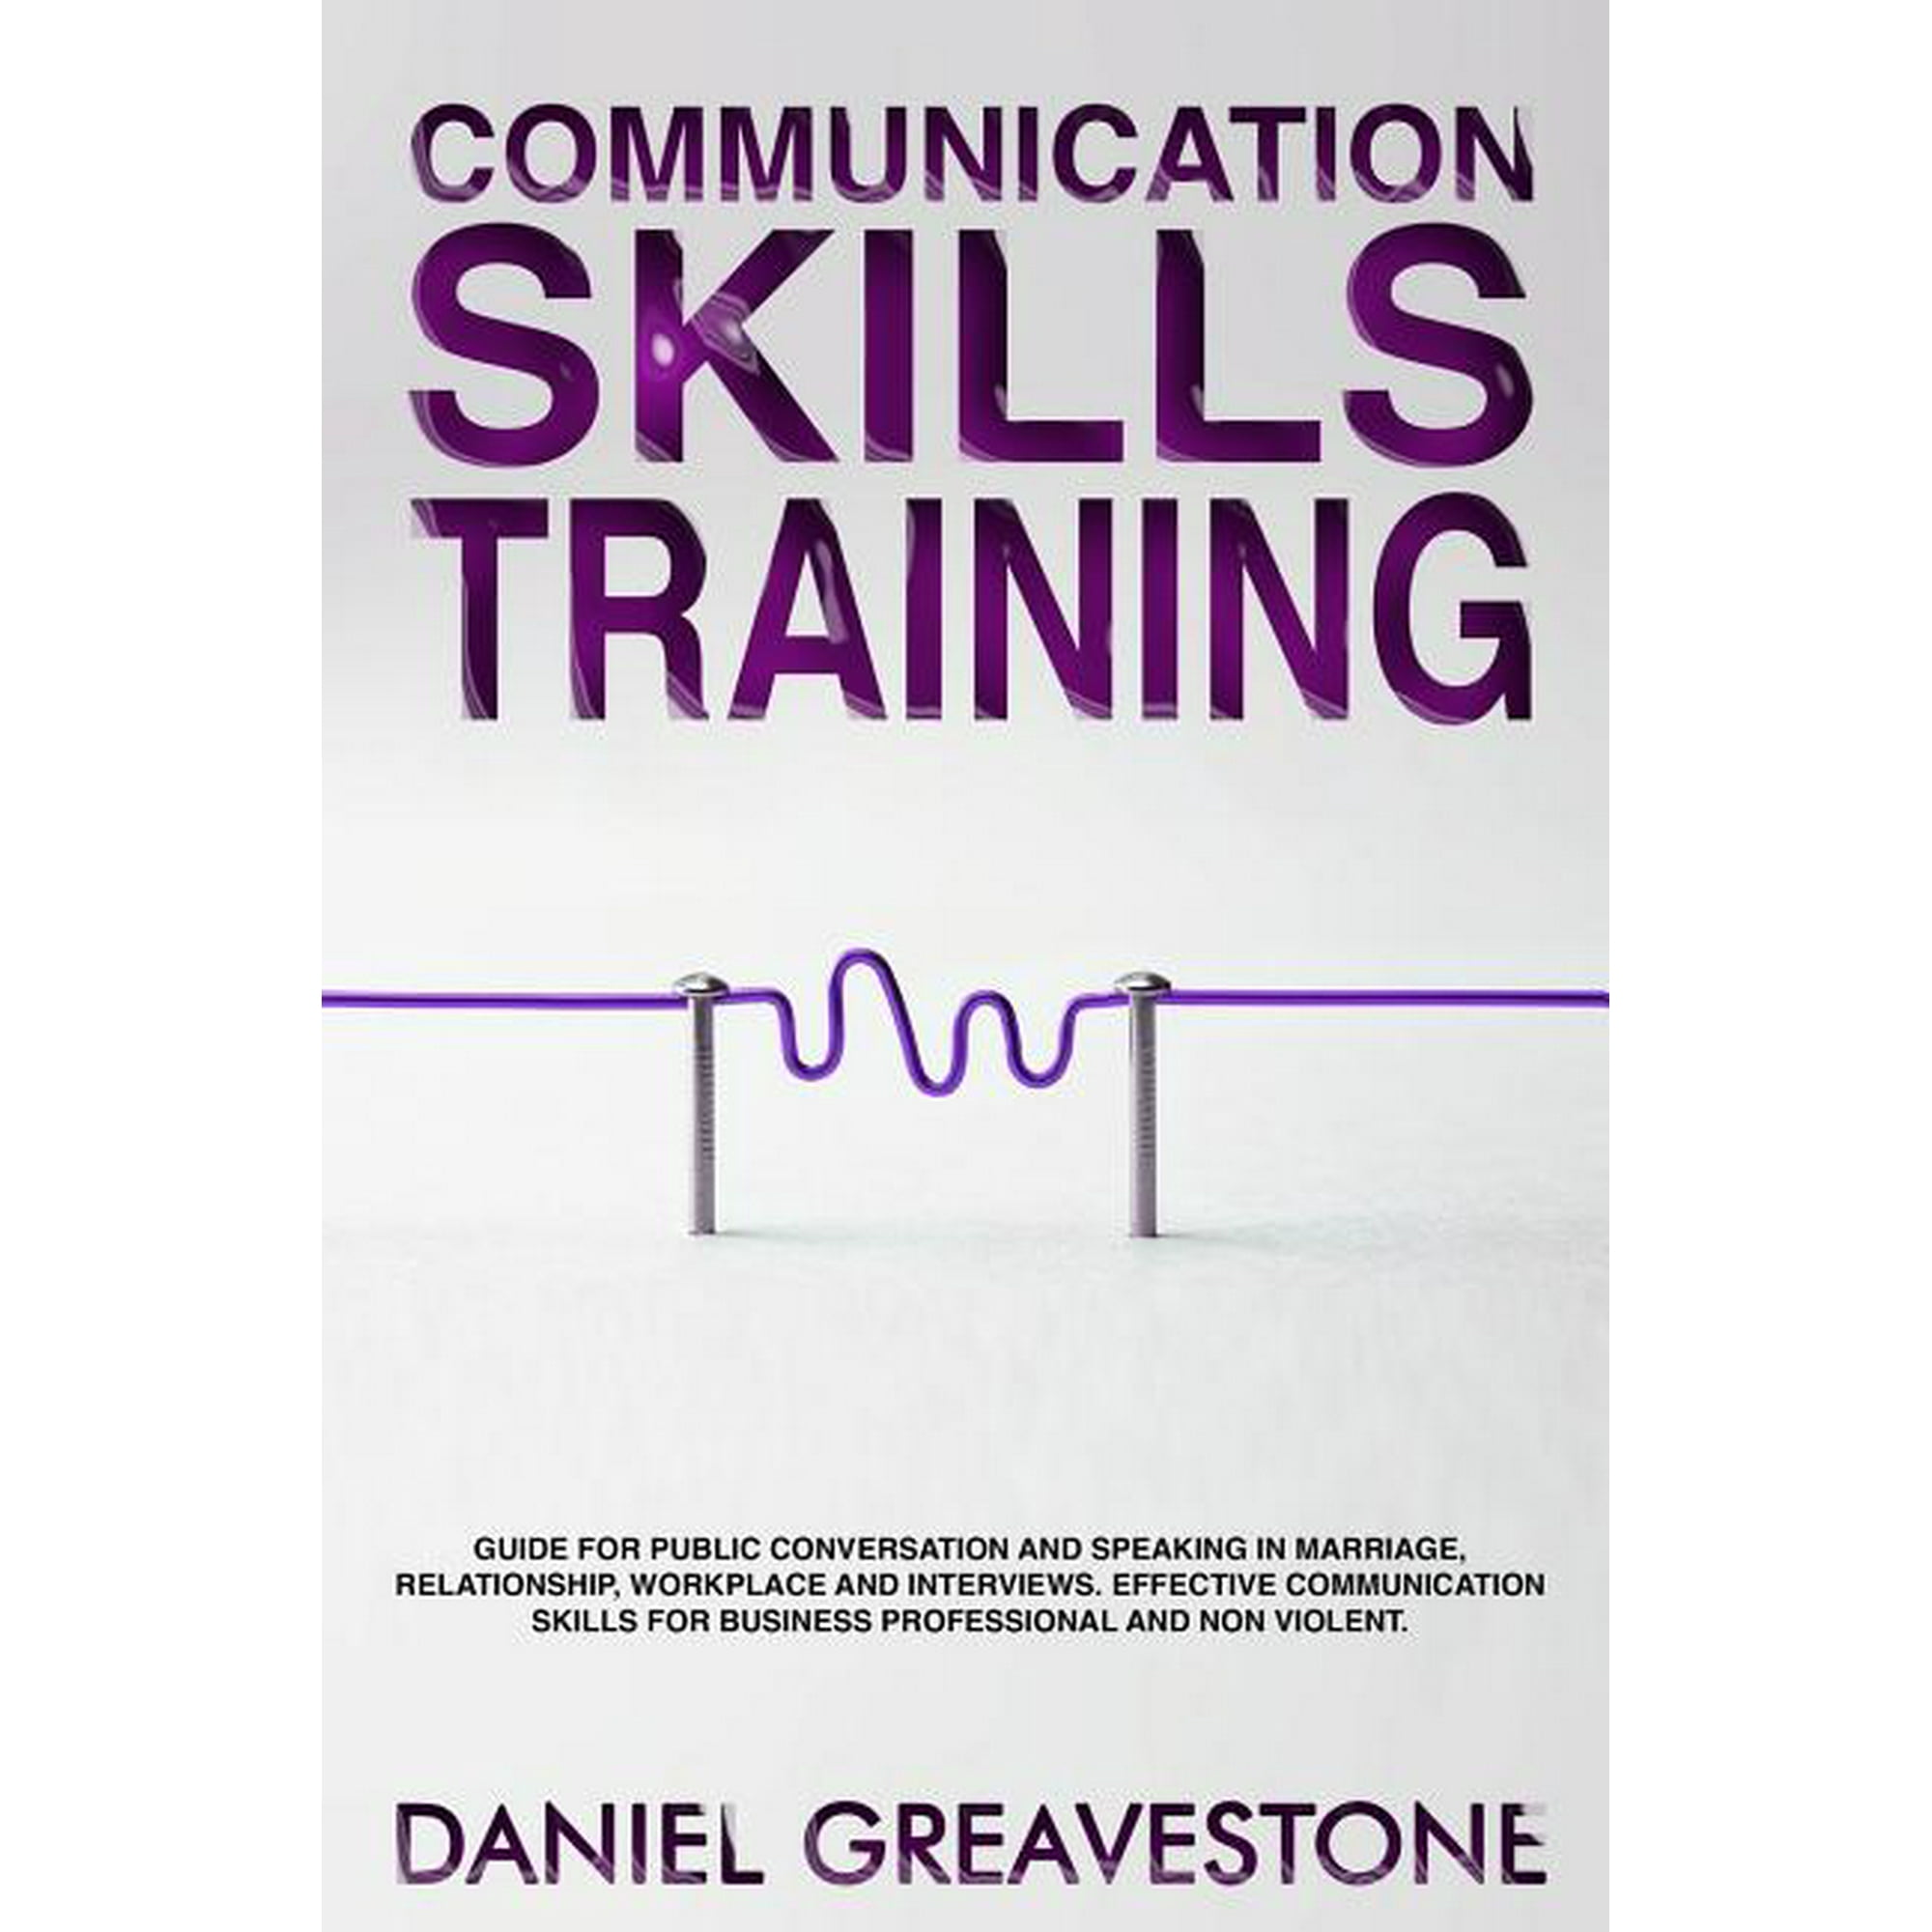 effective communication skills training